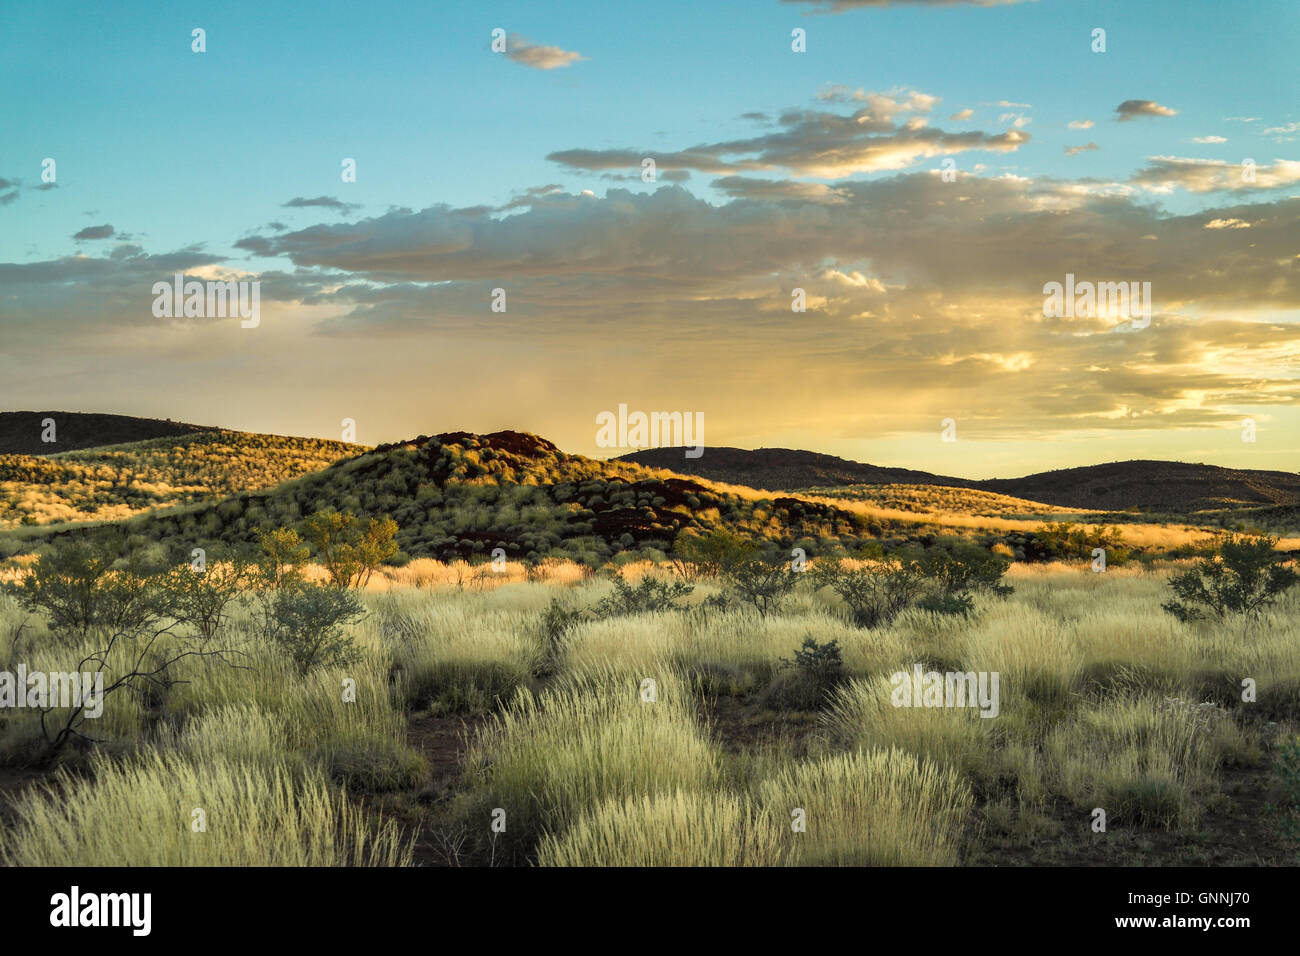 Typical Outback landscape in the Karijini Range / Pilbara - Western Australia - Australia Stock Photo